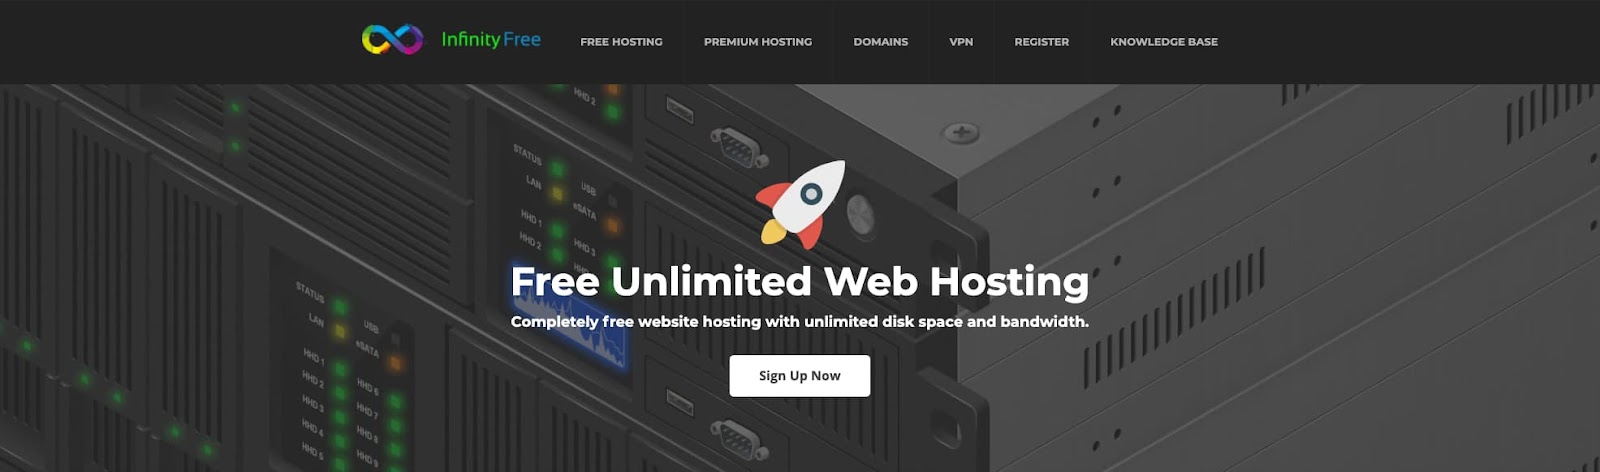 free web hosting sites: infinityfree